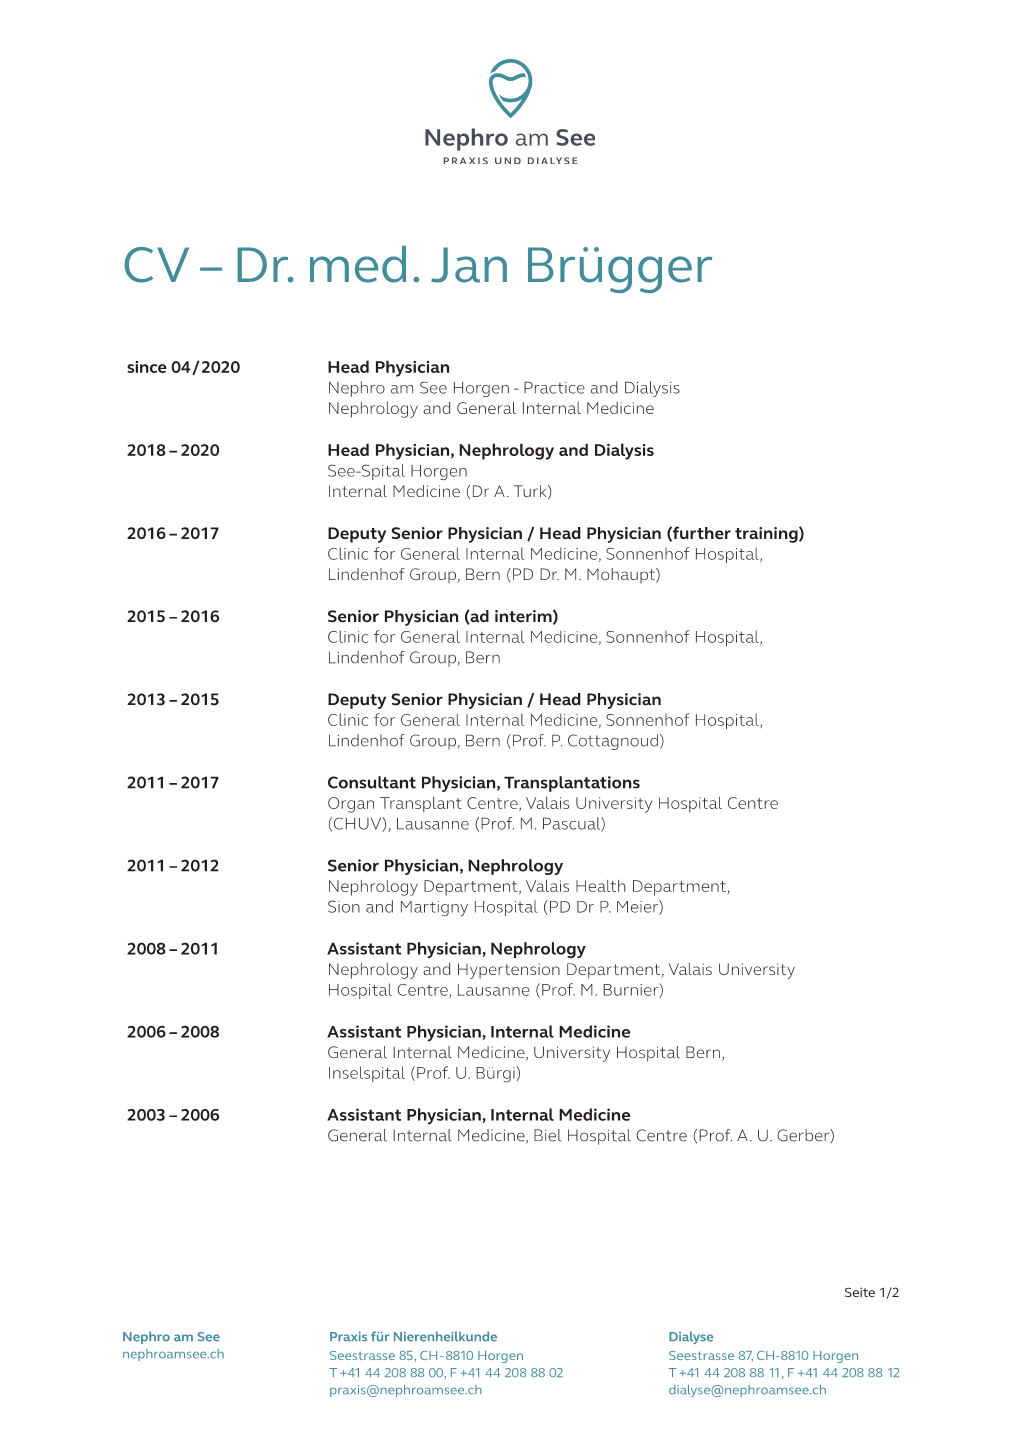 Dr. Med. Jan Brügger